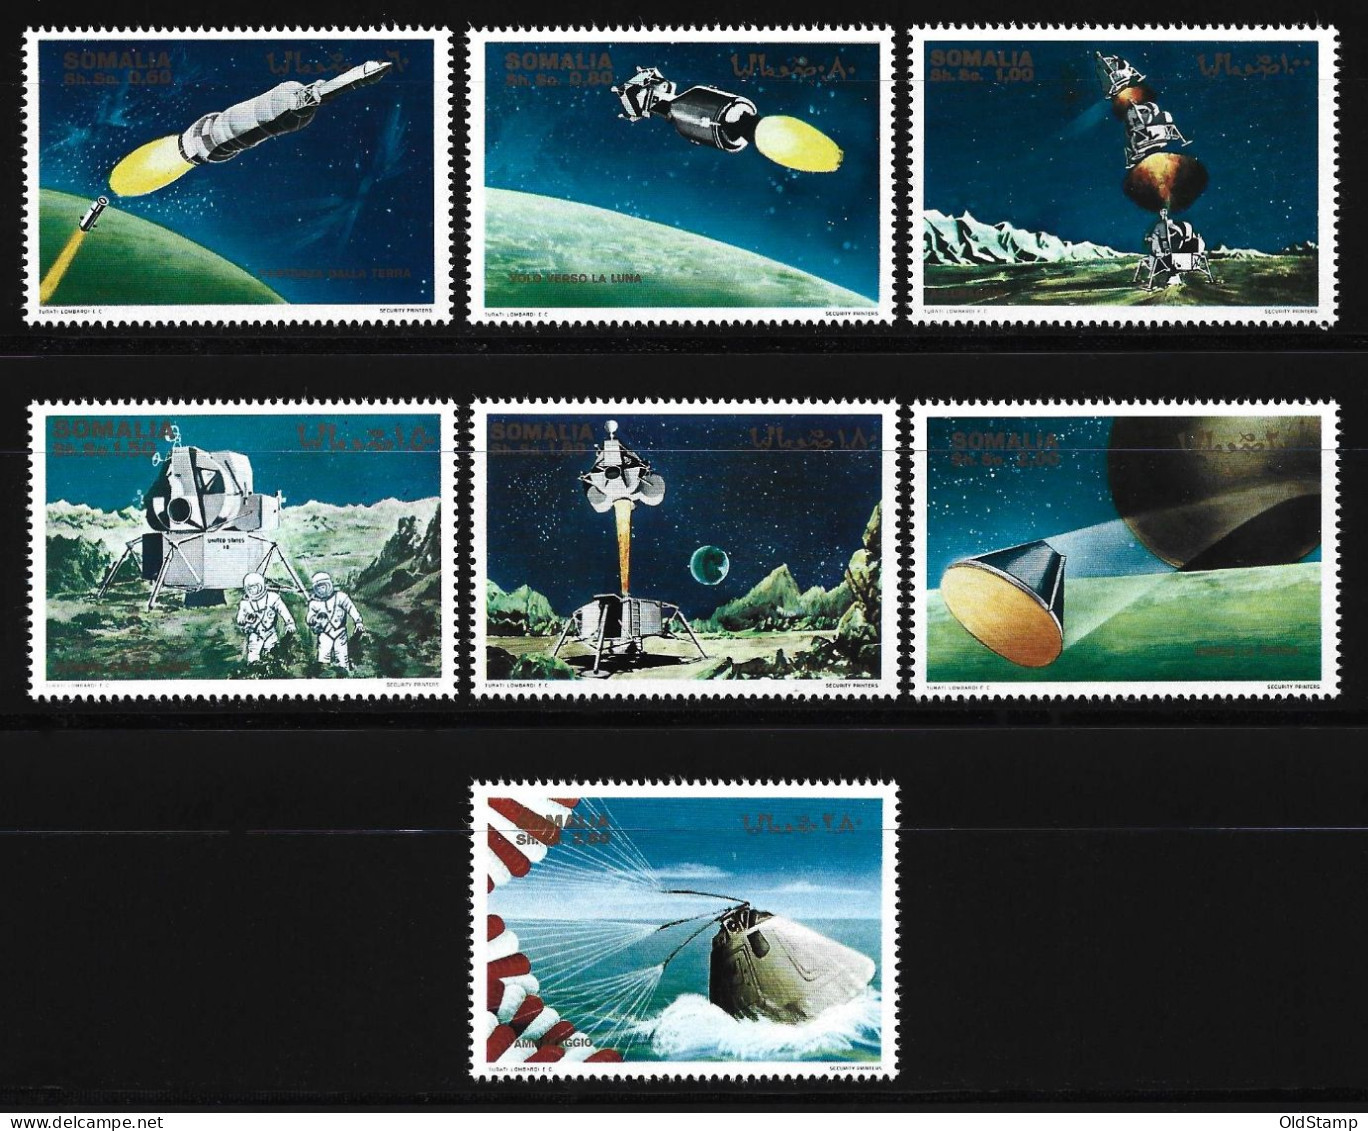 SPACE Somalia SPACE SPACESHIP PLANET ASTRONAUT STAR MNH LUXE Africa Stamps FULL SET - Sammlungen